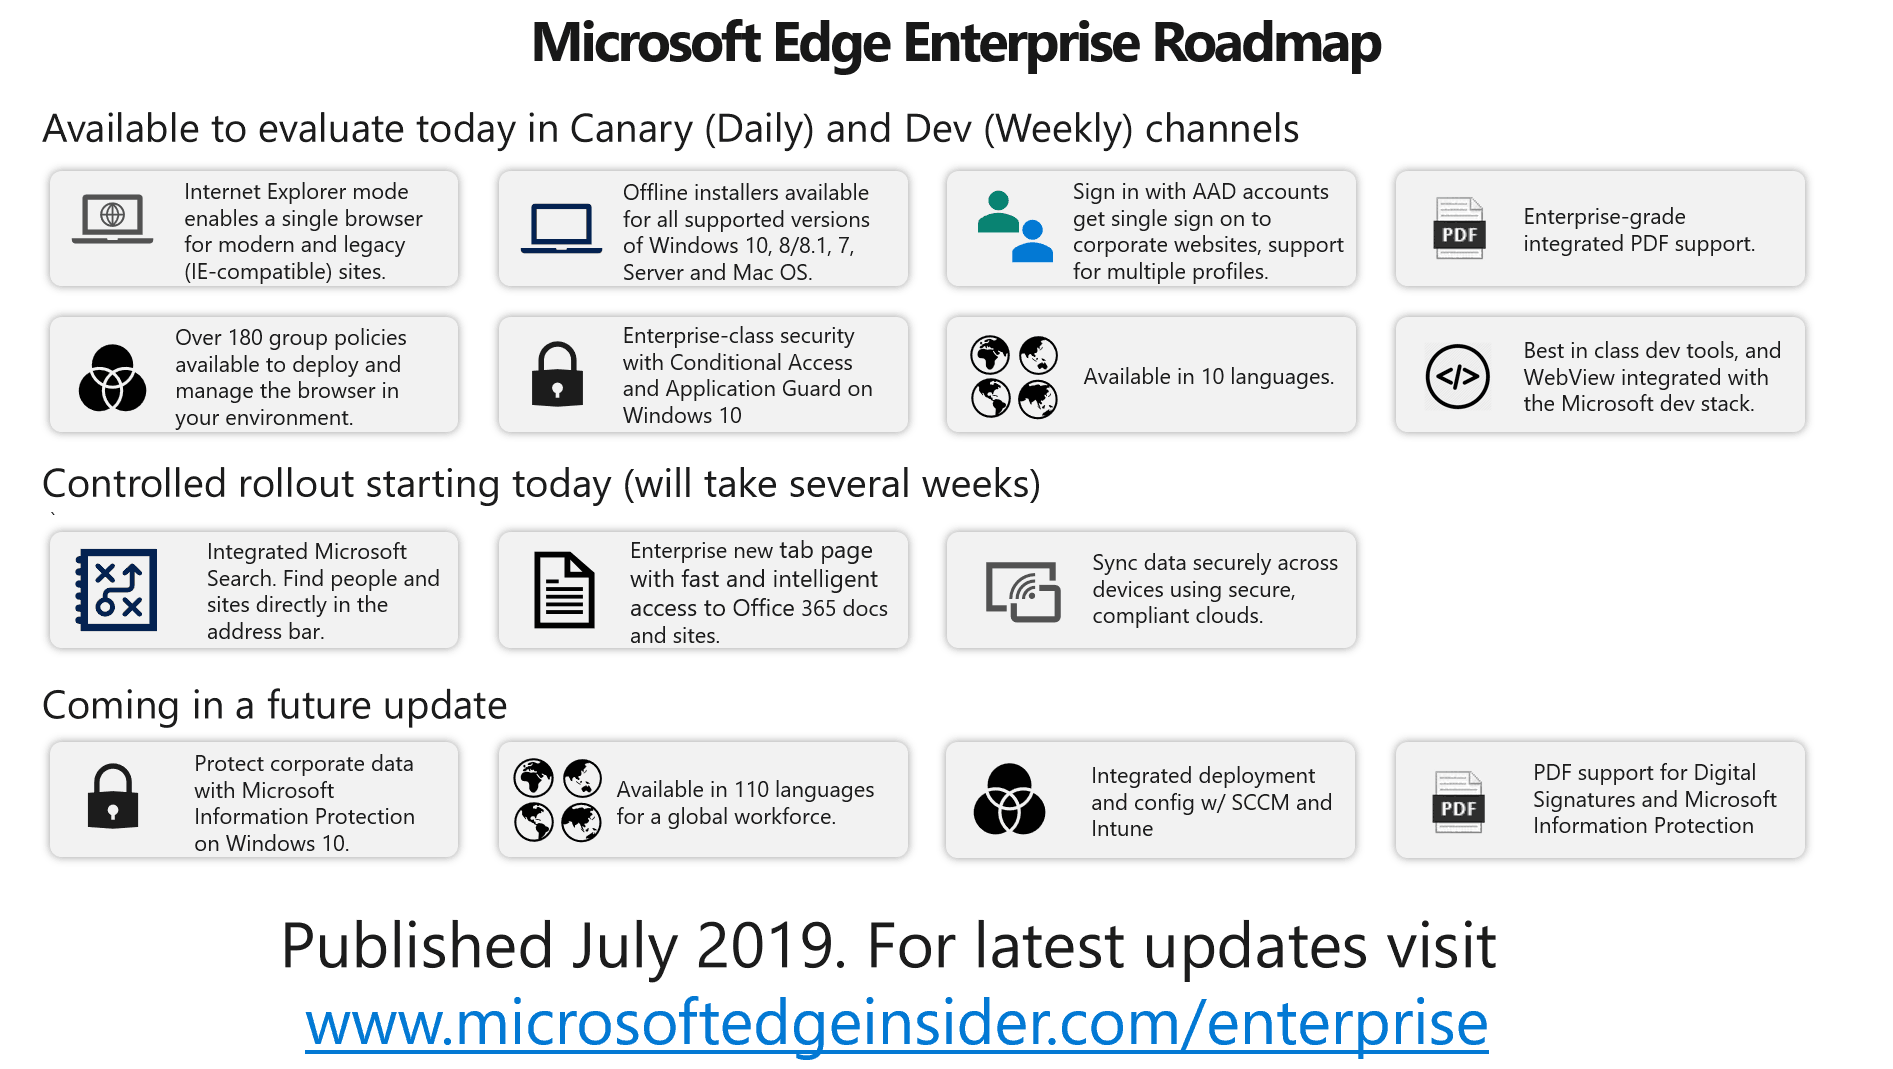 Microsoft shares its Microsoft Edge Enterprise roadmap - OnMSFT.com - July 17, 2019